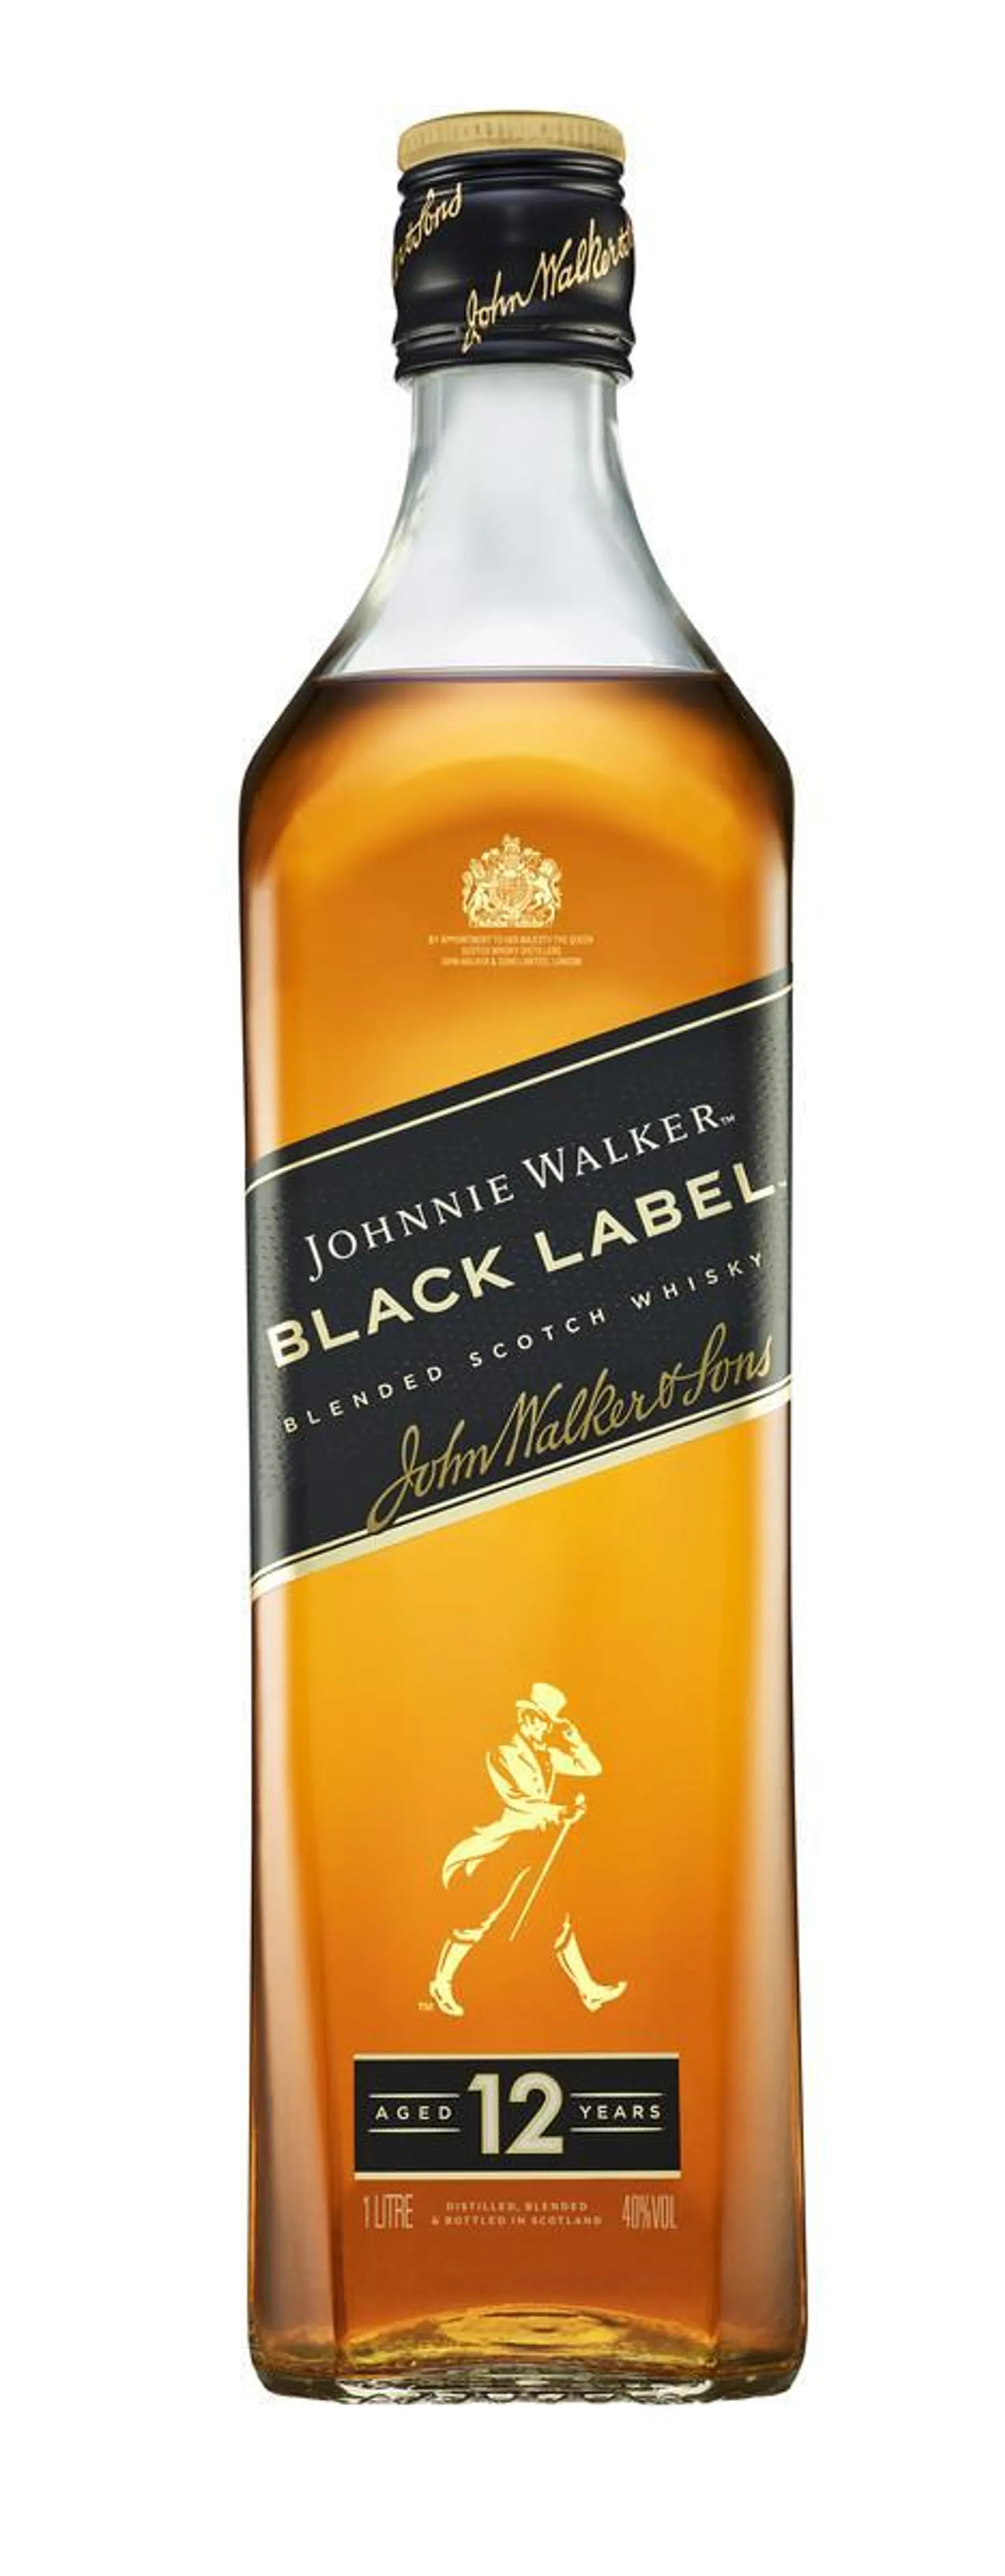 Whisky Black Label garrafa 1 Litro - Johnnie Walker